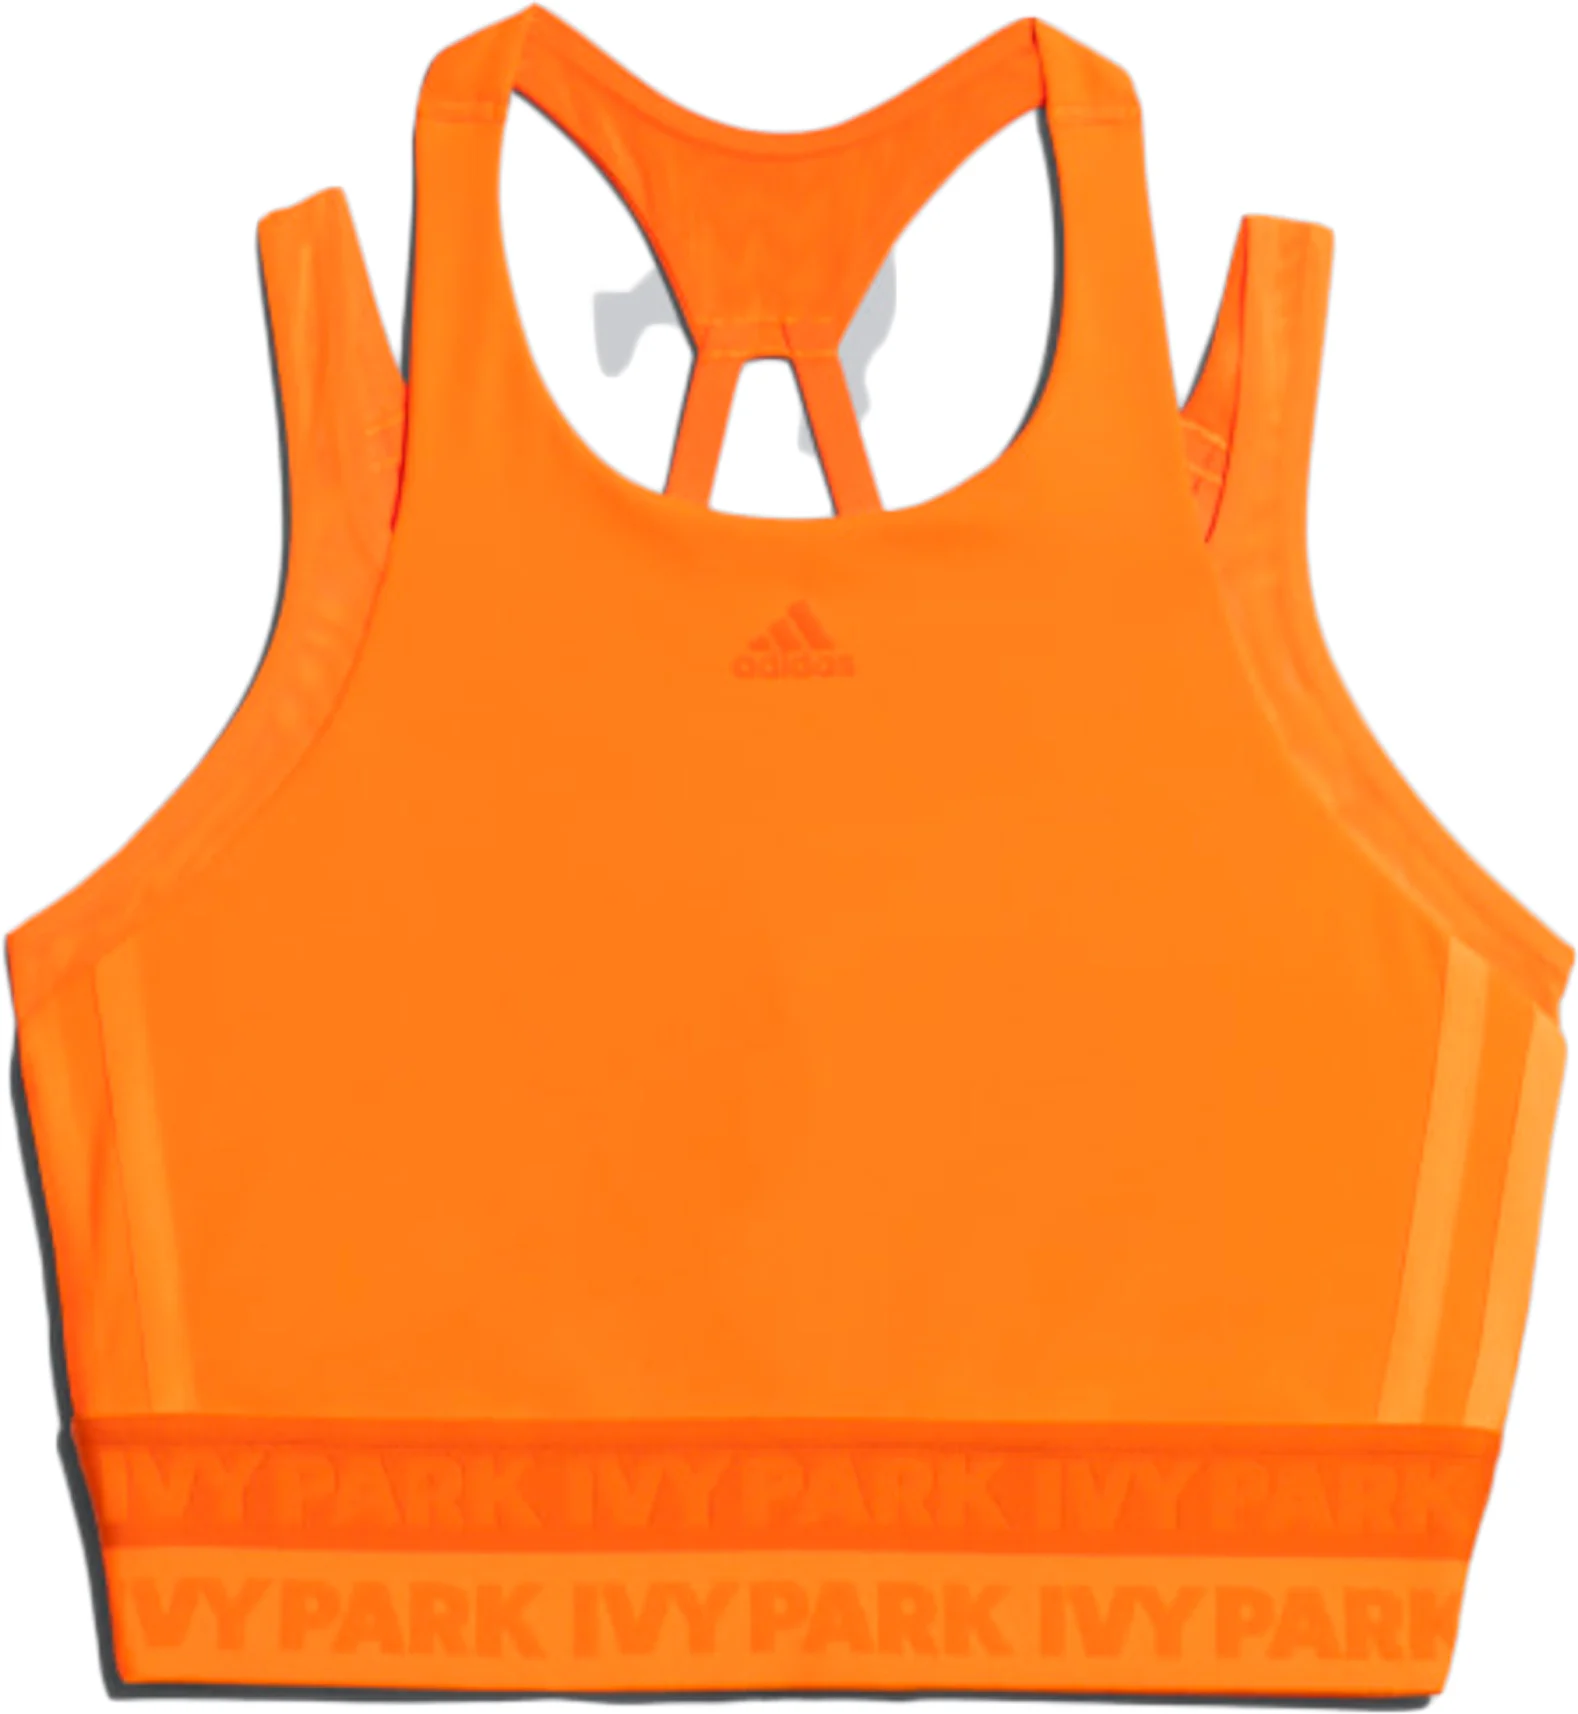 adidas Ivy Park Halter Bra Solar Orange/Semi Solar Orange - FW19 - US